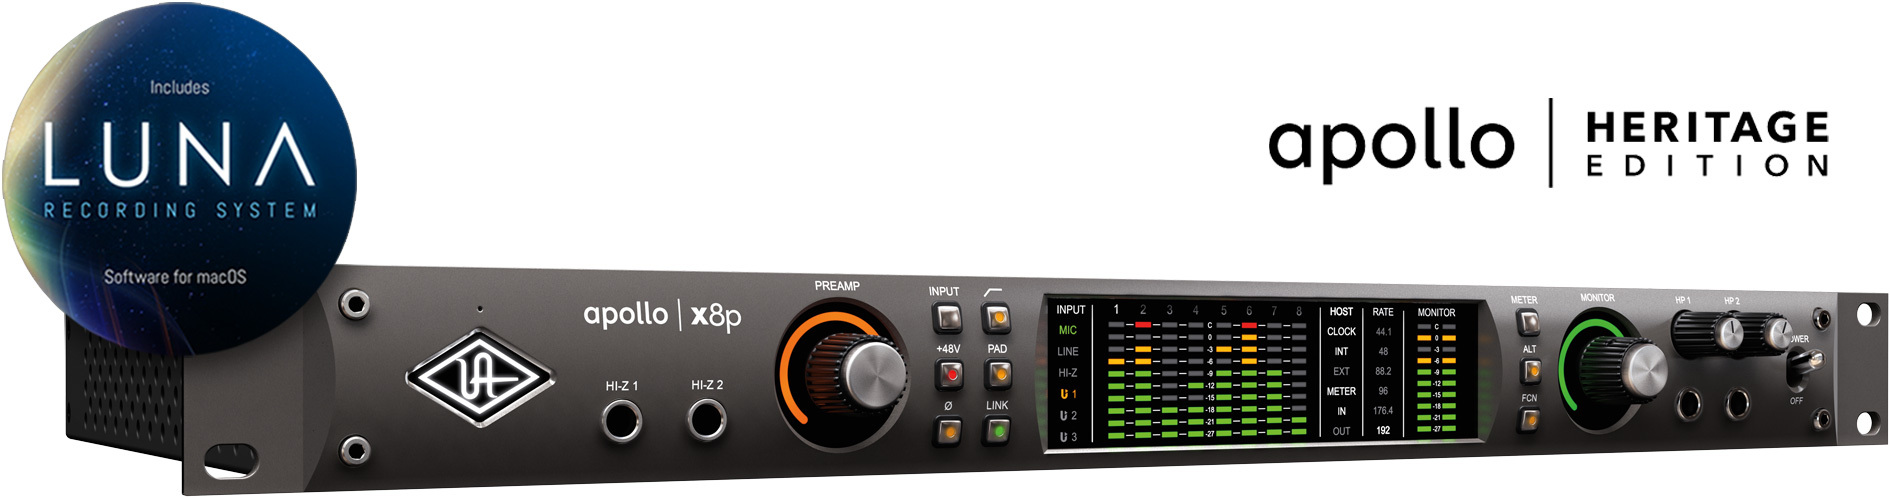 Universal Audio Apollo X8p Heritage Edition - Interface de audio thunderbolt - Main picture